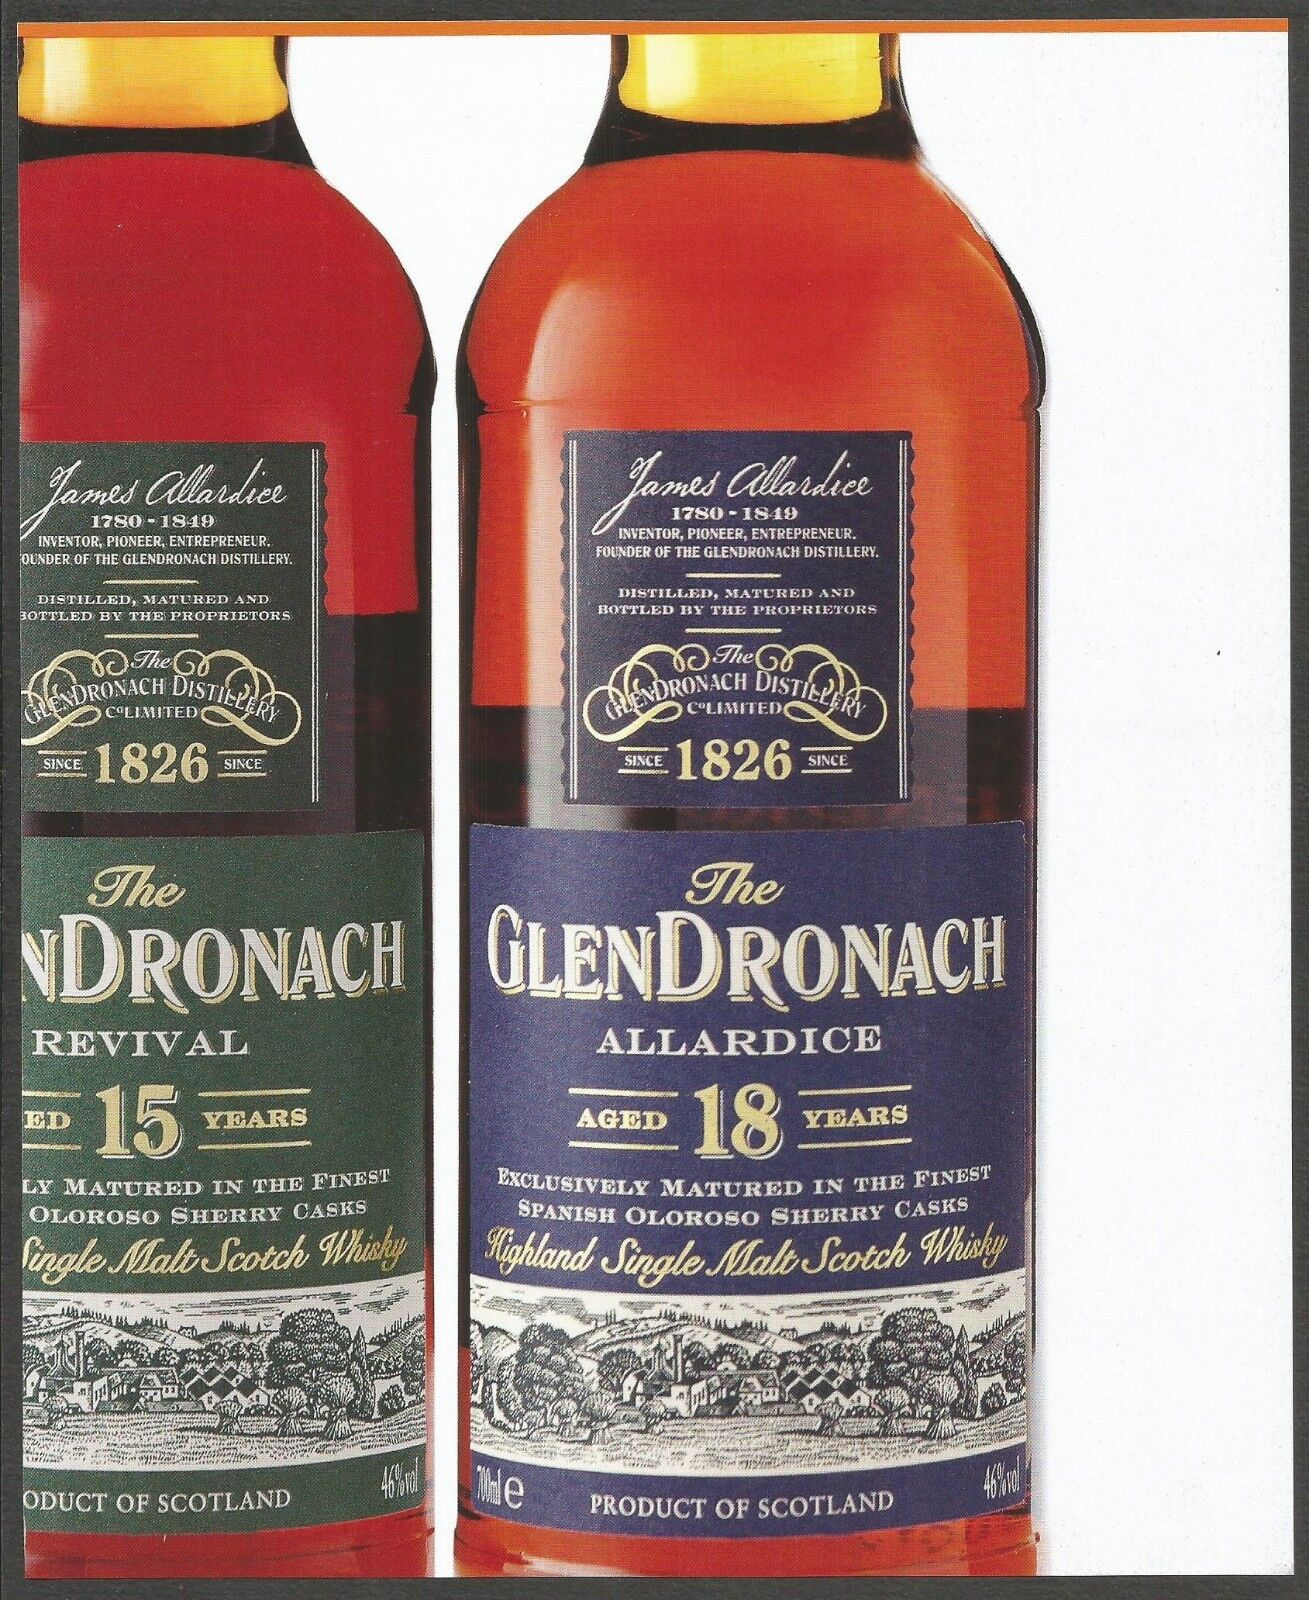 THE GLENDRONACH Highland Single Malt Scotch Whisky-2015 Magazine Photo Clipping